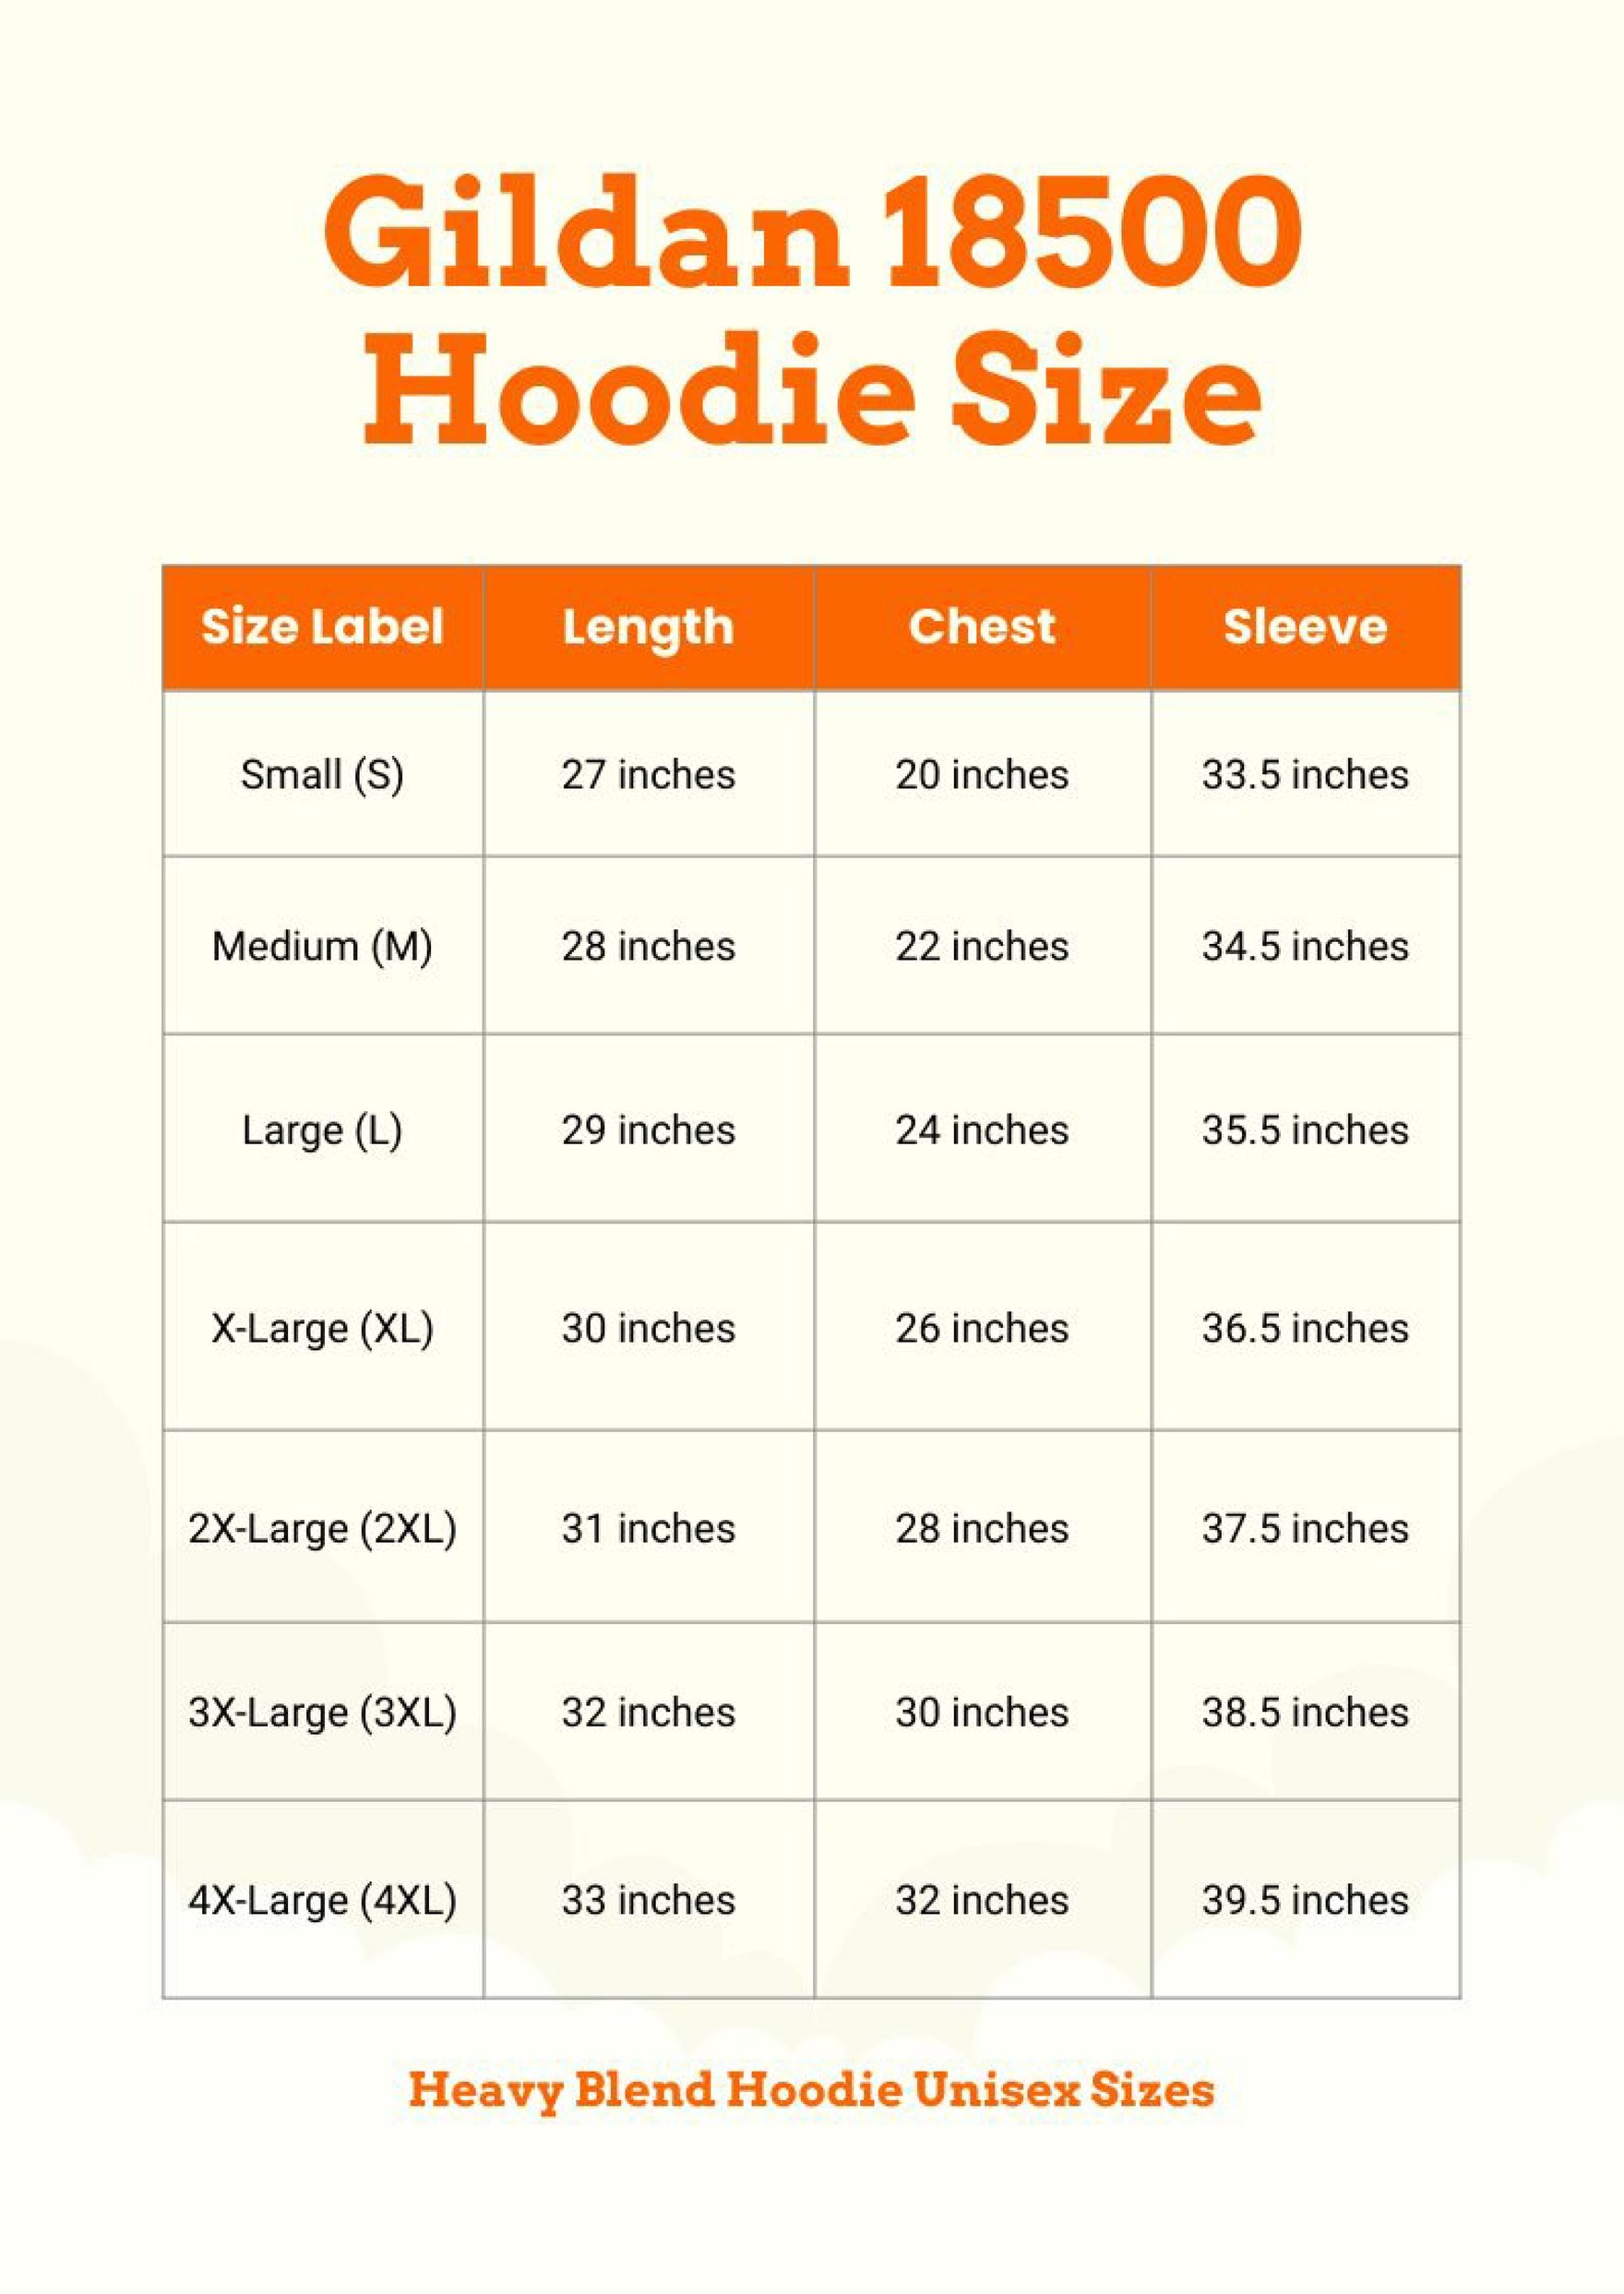 Gildan Hoodie Size Chart in PDF, Illustrator